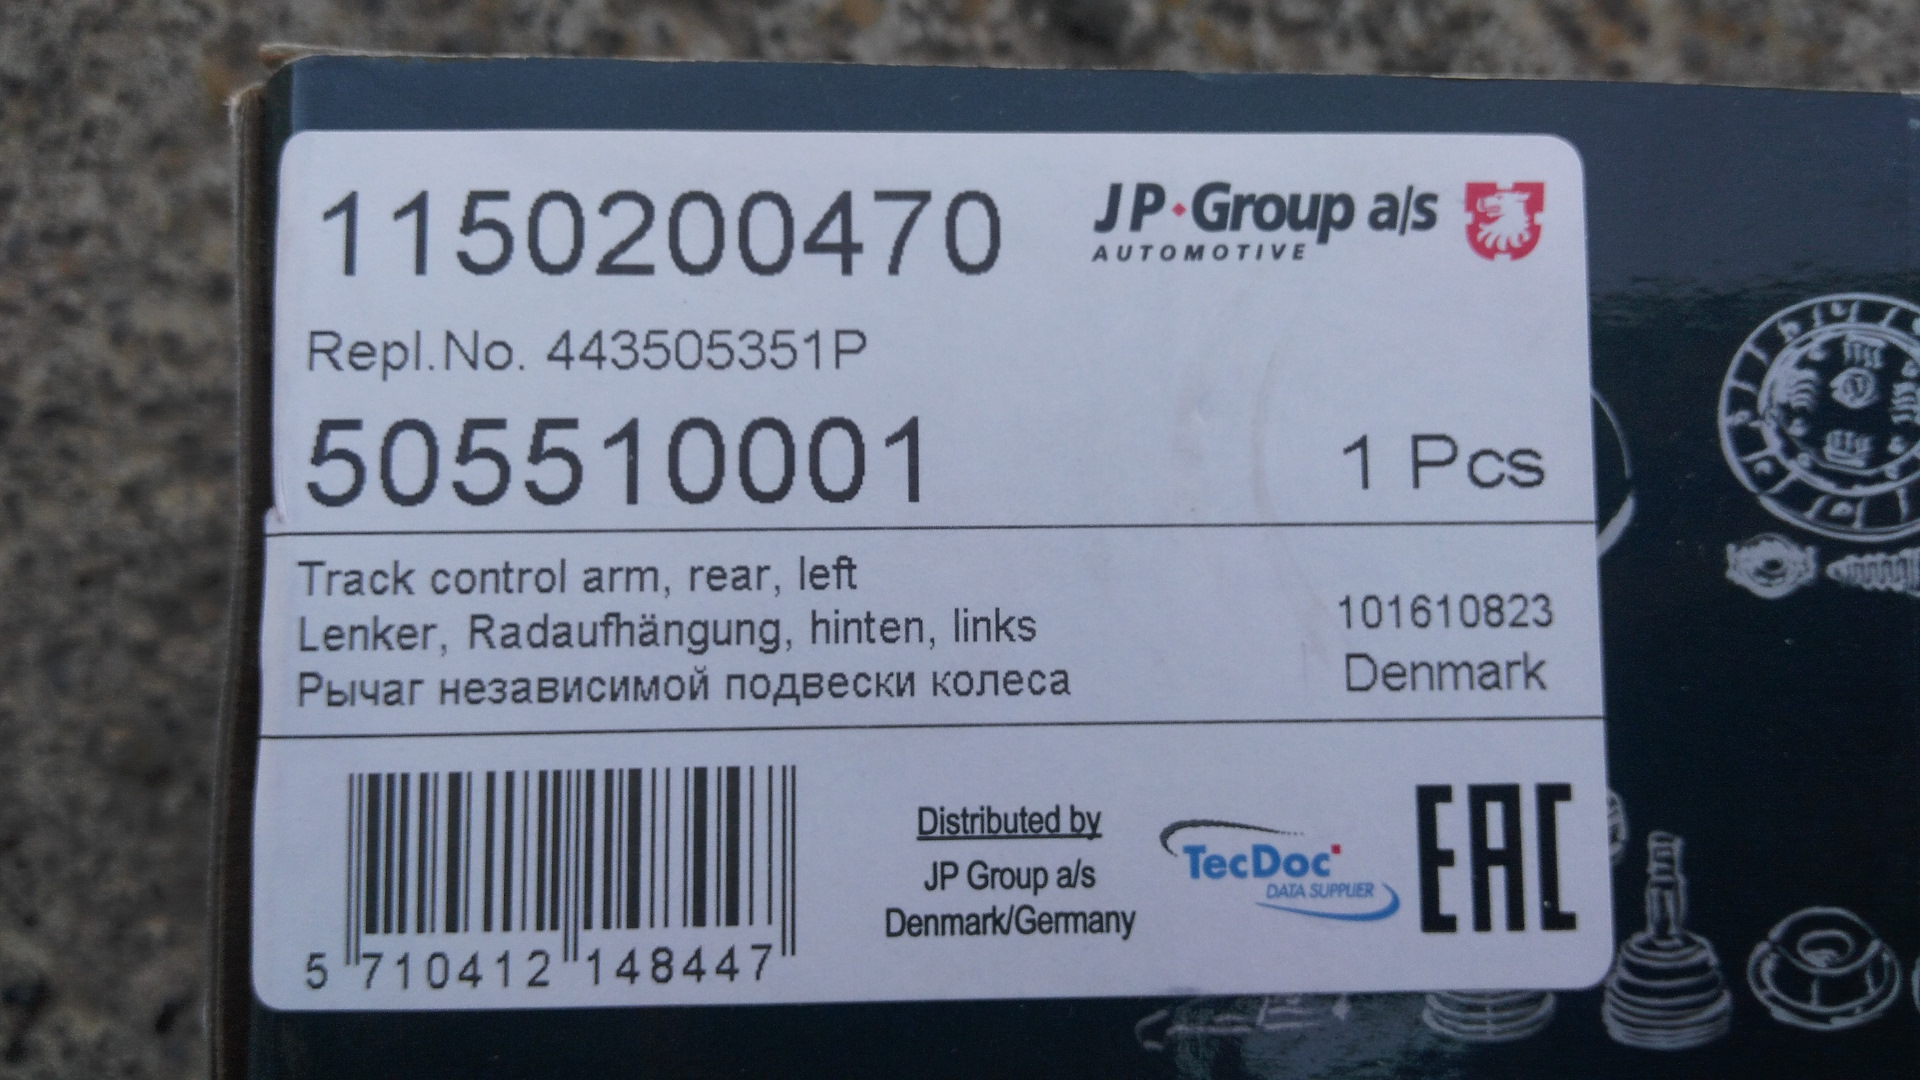 Производитель jp group. Jp Group запчасти. 443505351p. Jp Group 1150200470. Jp Group 1196300500 отзывы.